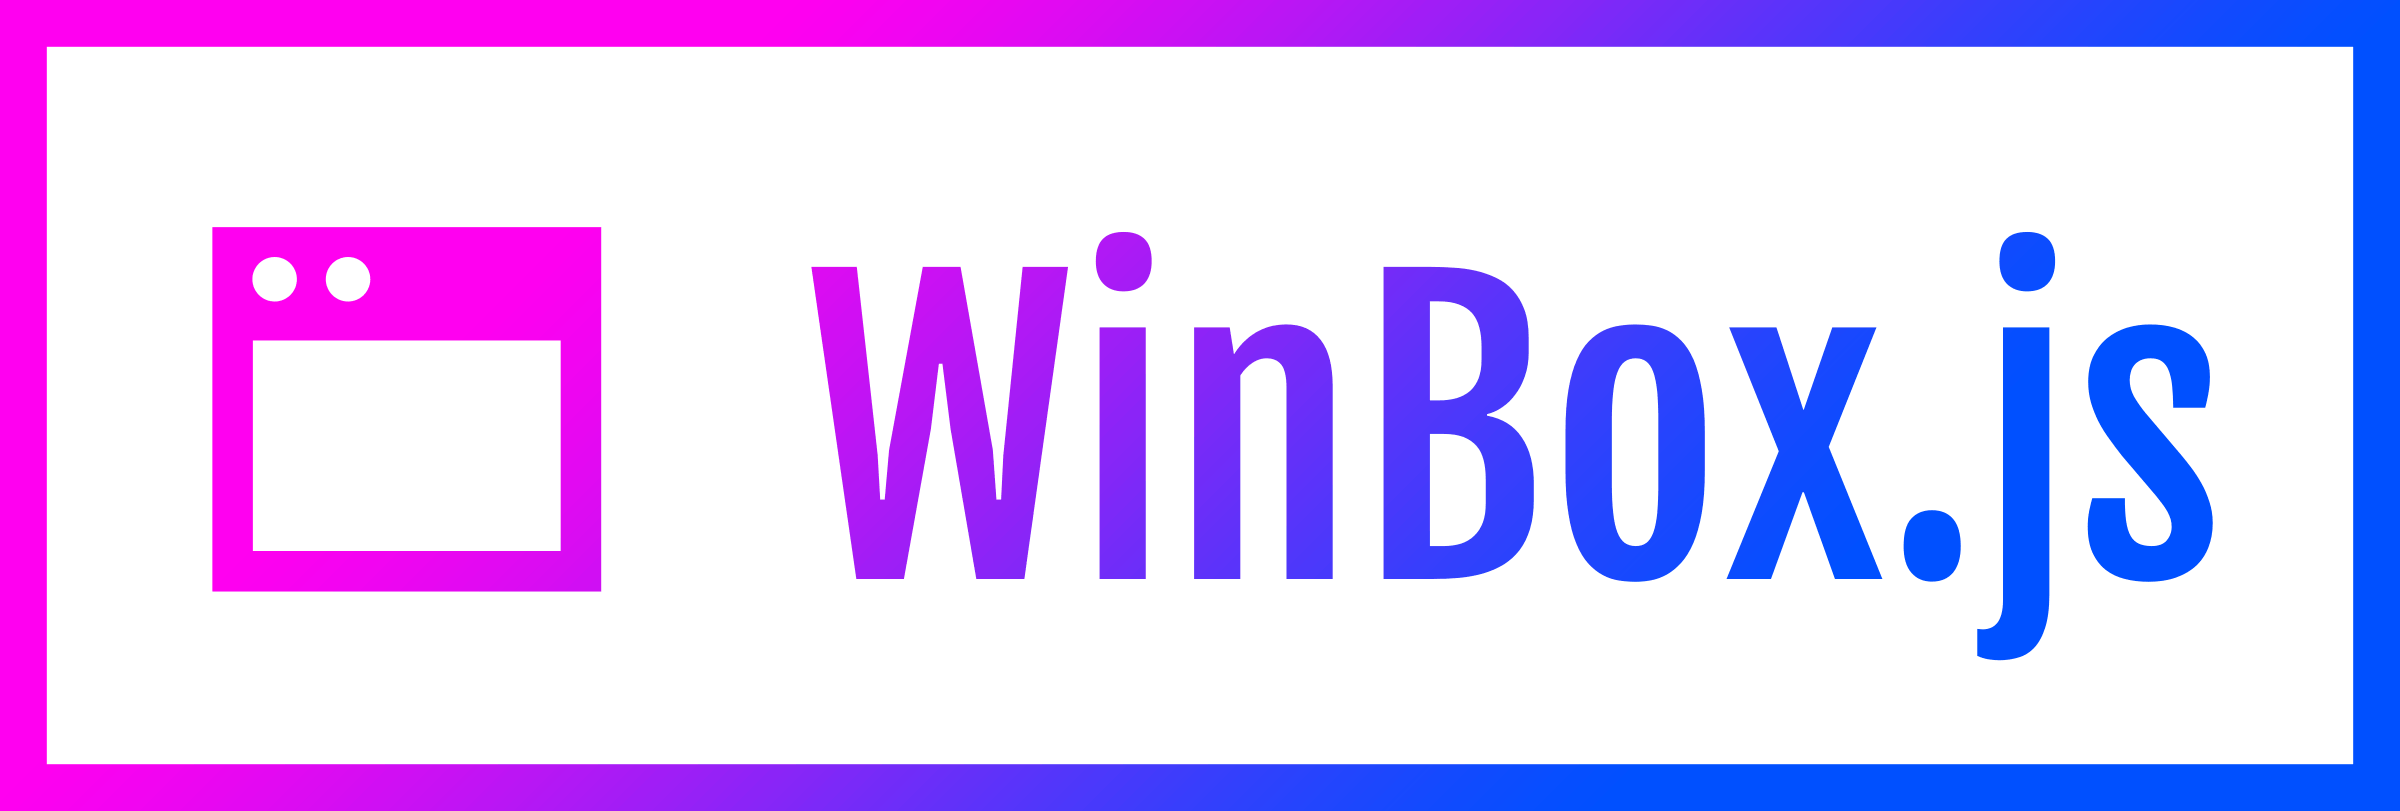 Winbox.js